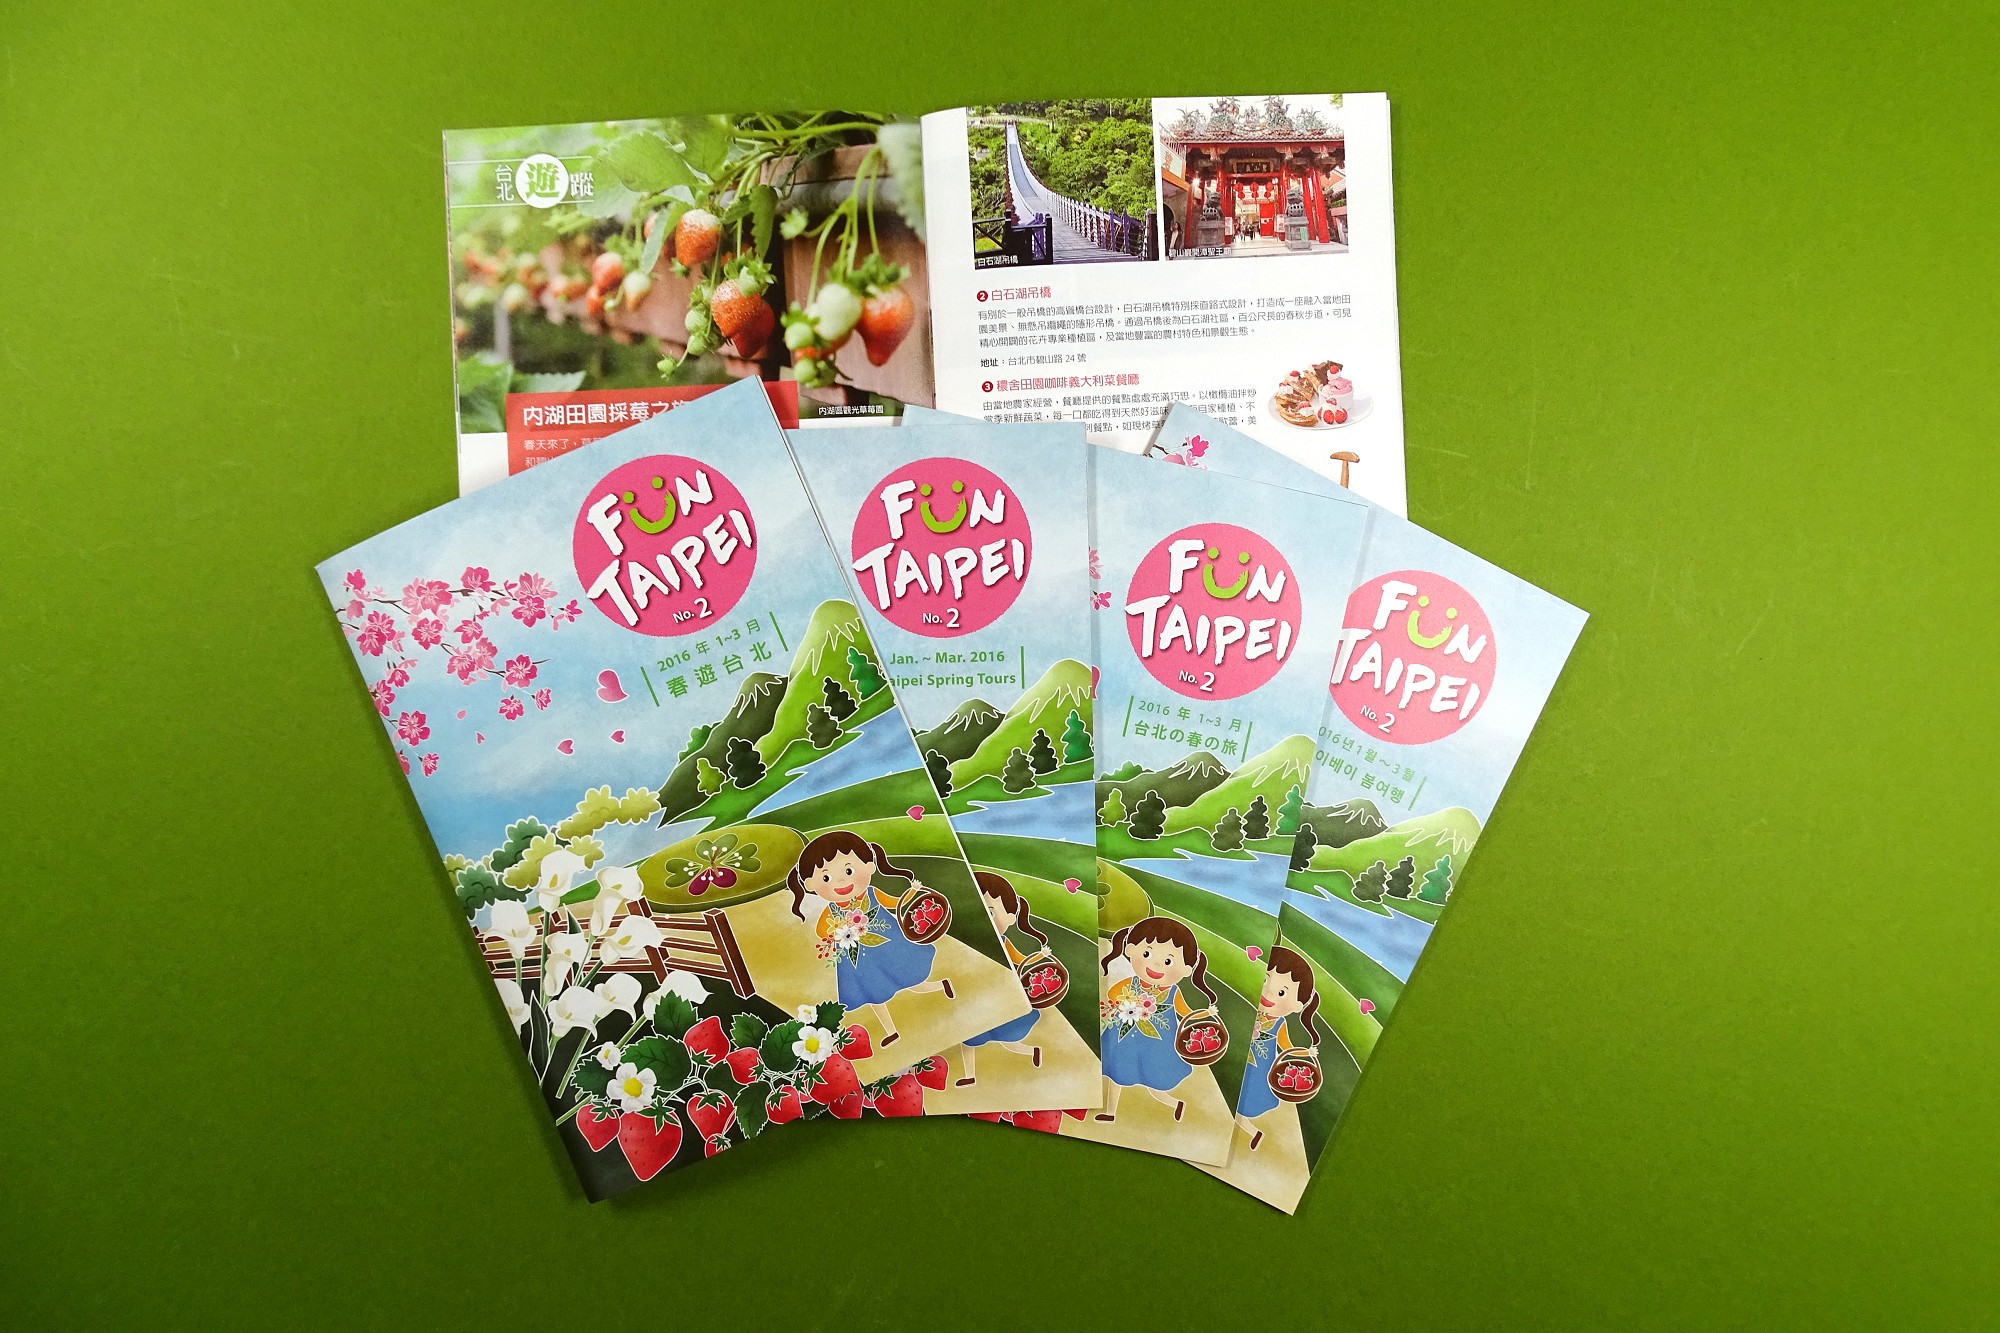 《Fun Taipei》共發行中、英、日、韓4種語版，每季帶給遊客最豐富的旅遊資訊。